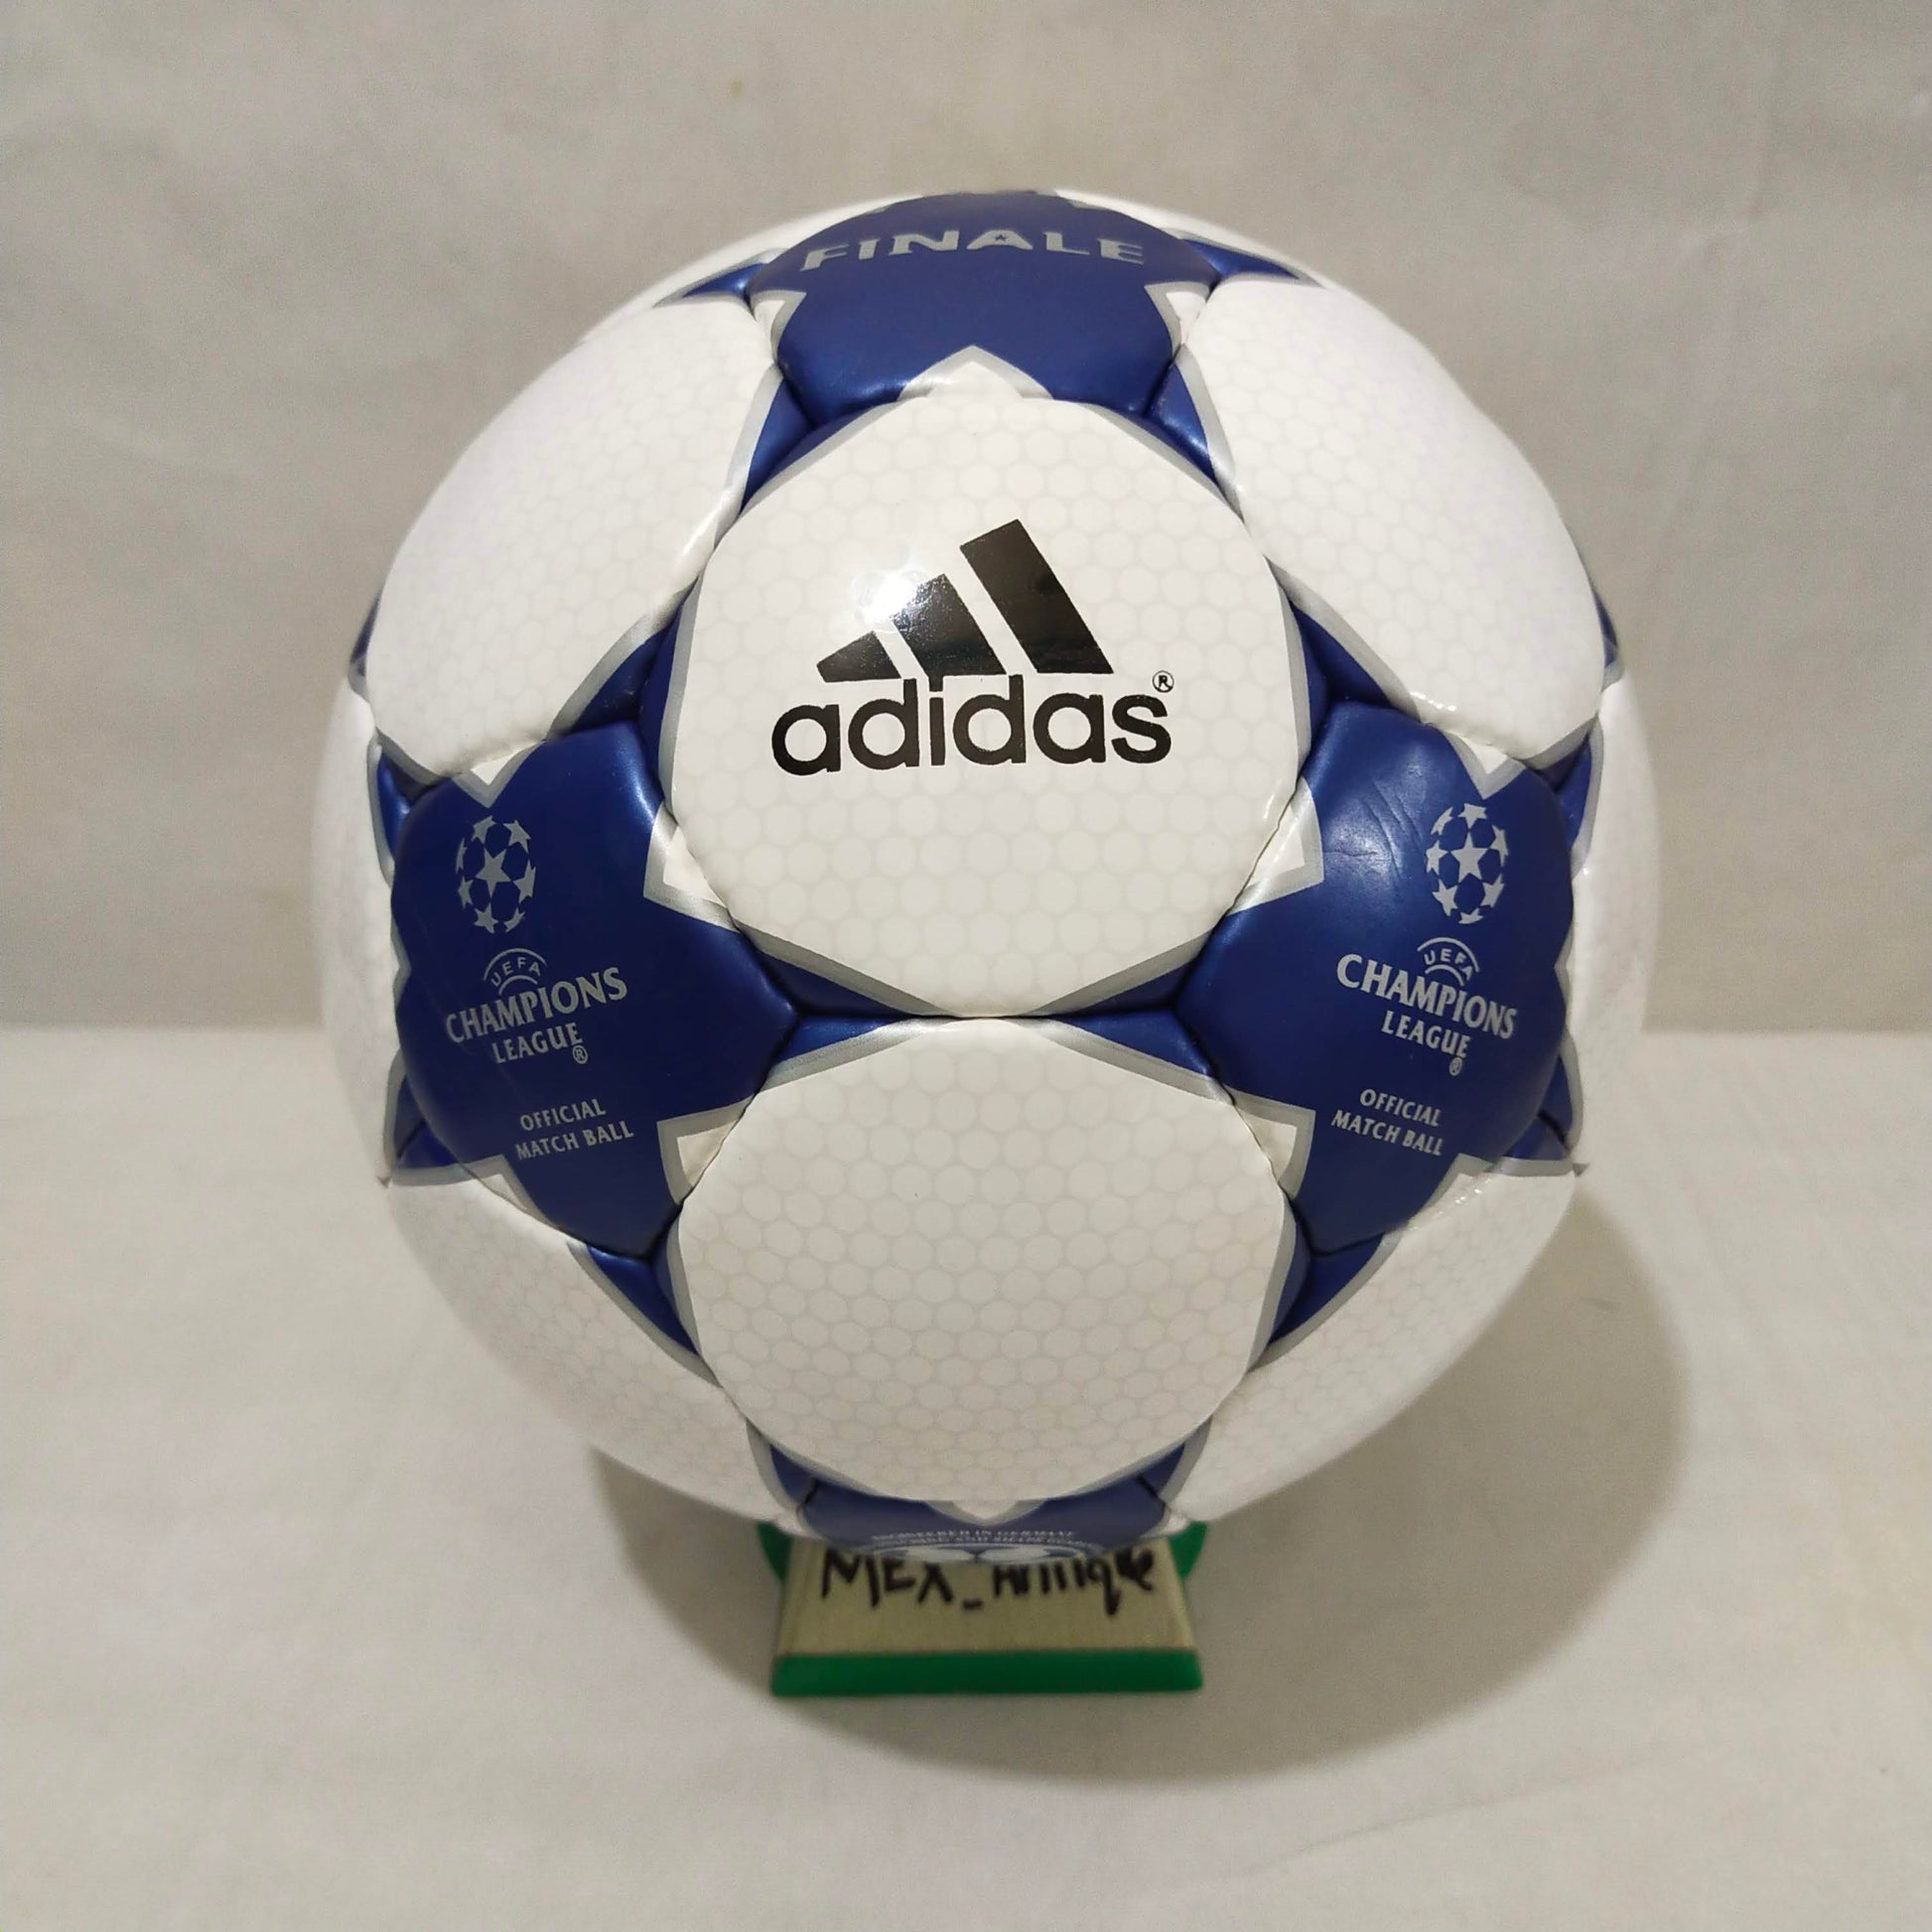 Adidas Finale 3 | 2003-2004 | UEFA Champions League Ball | Size 5 04